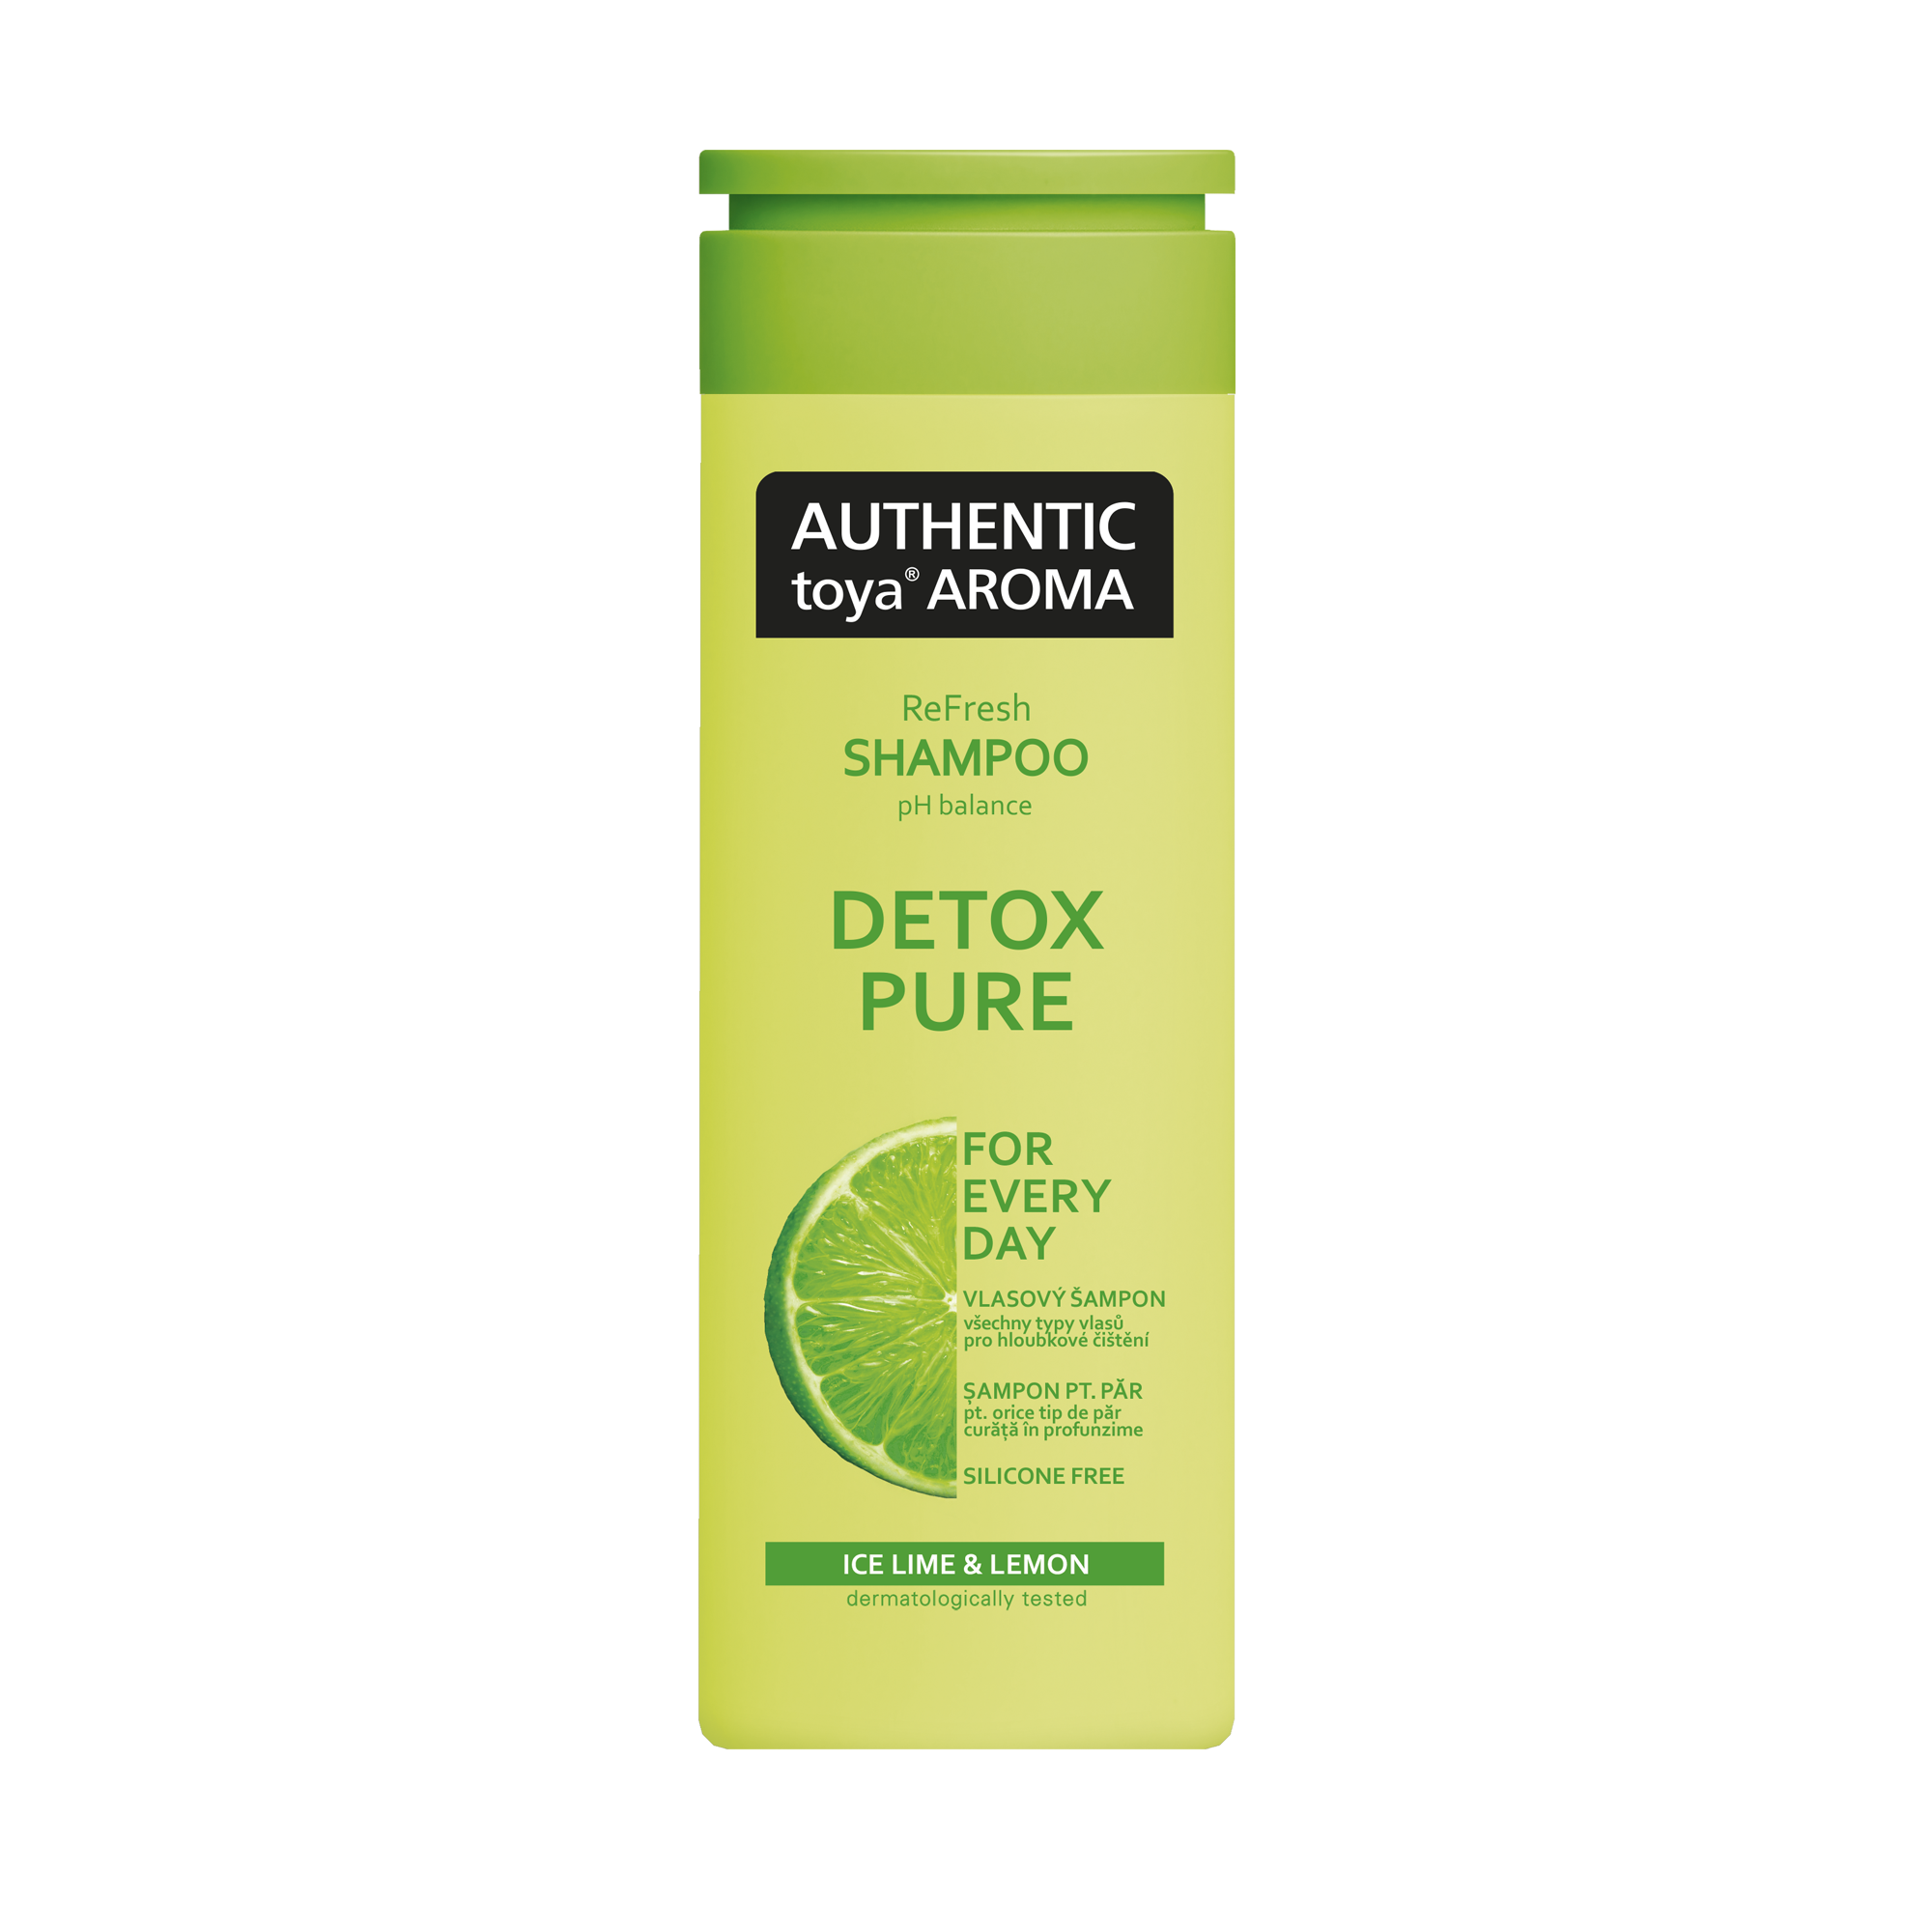 AUTHENTIC toya AROMA vlasový šampon Detox Pure 